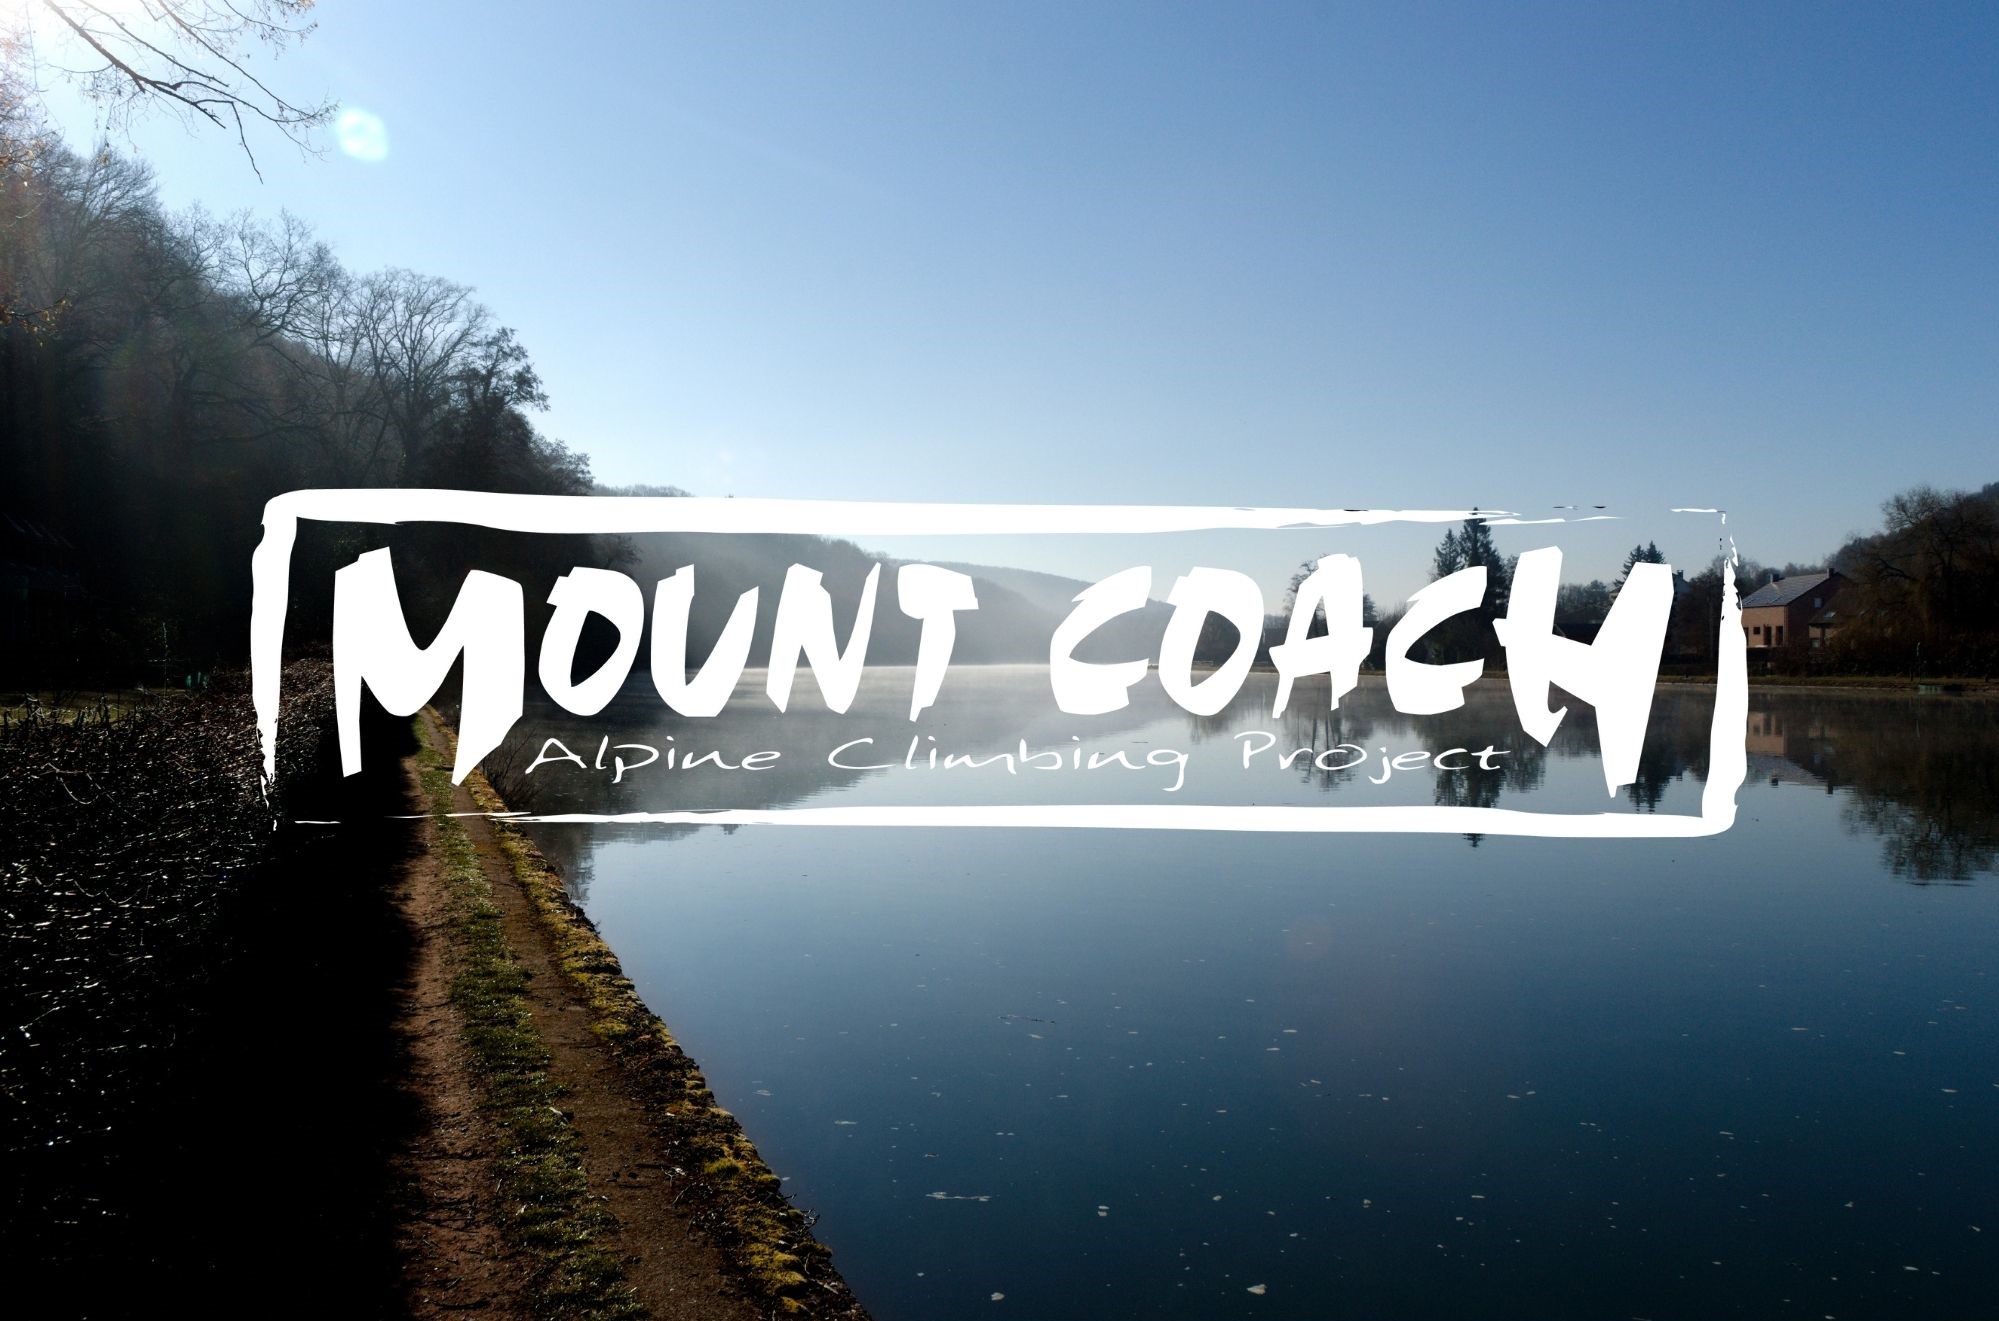 Mount Coach